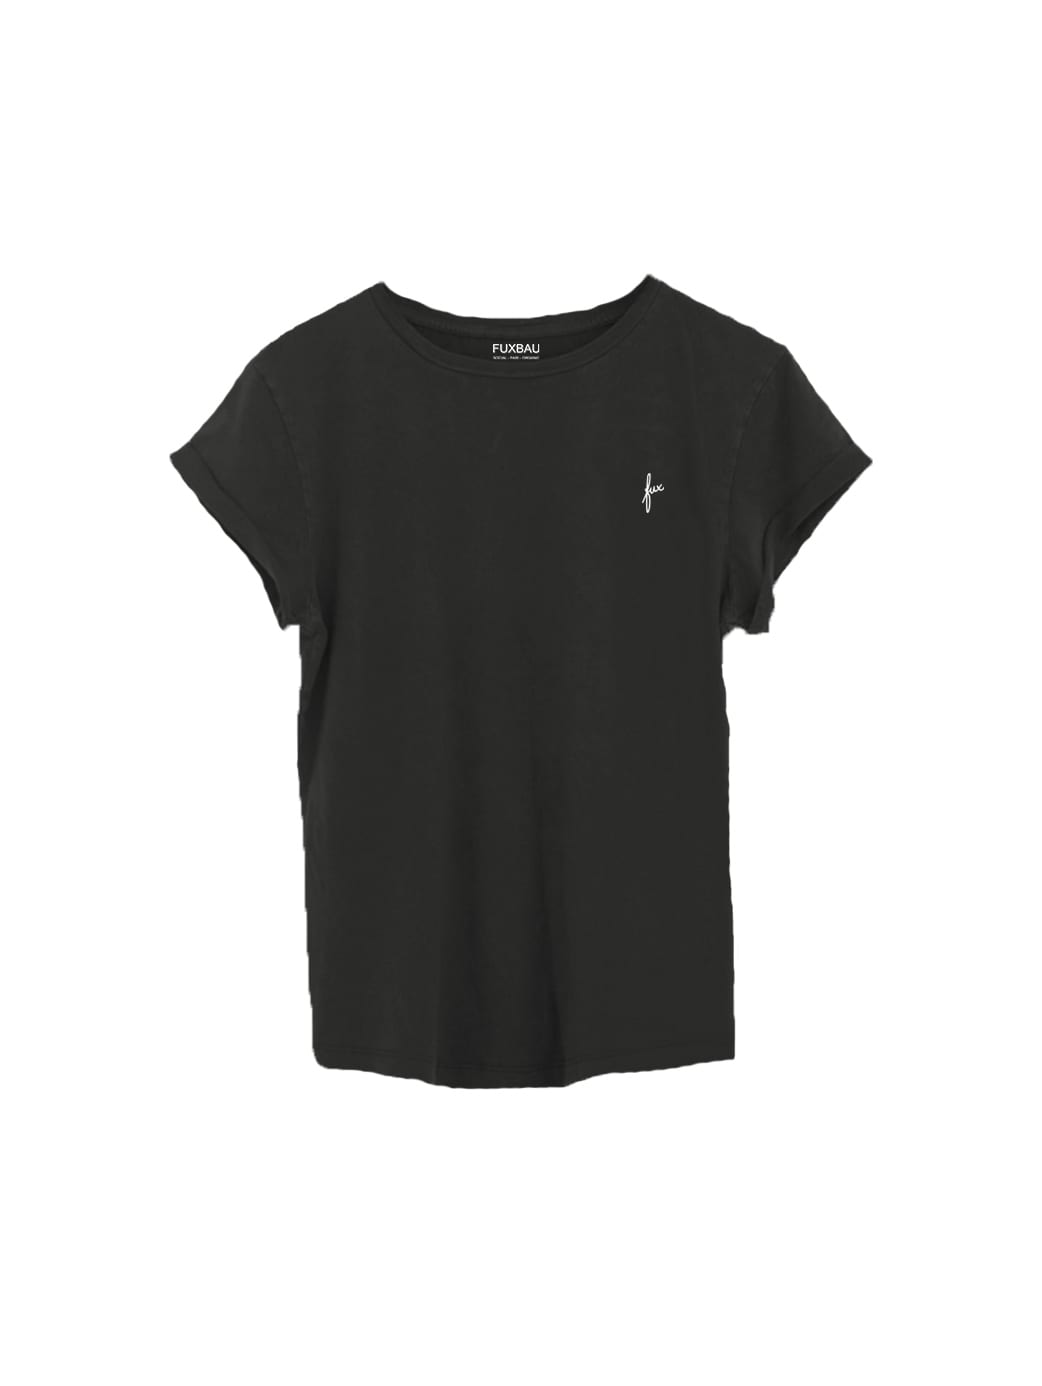 Frauen fux T-Shirt - schwarz